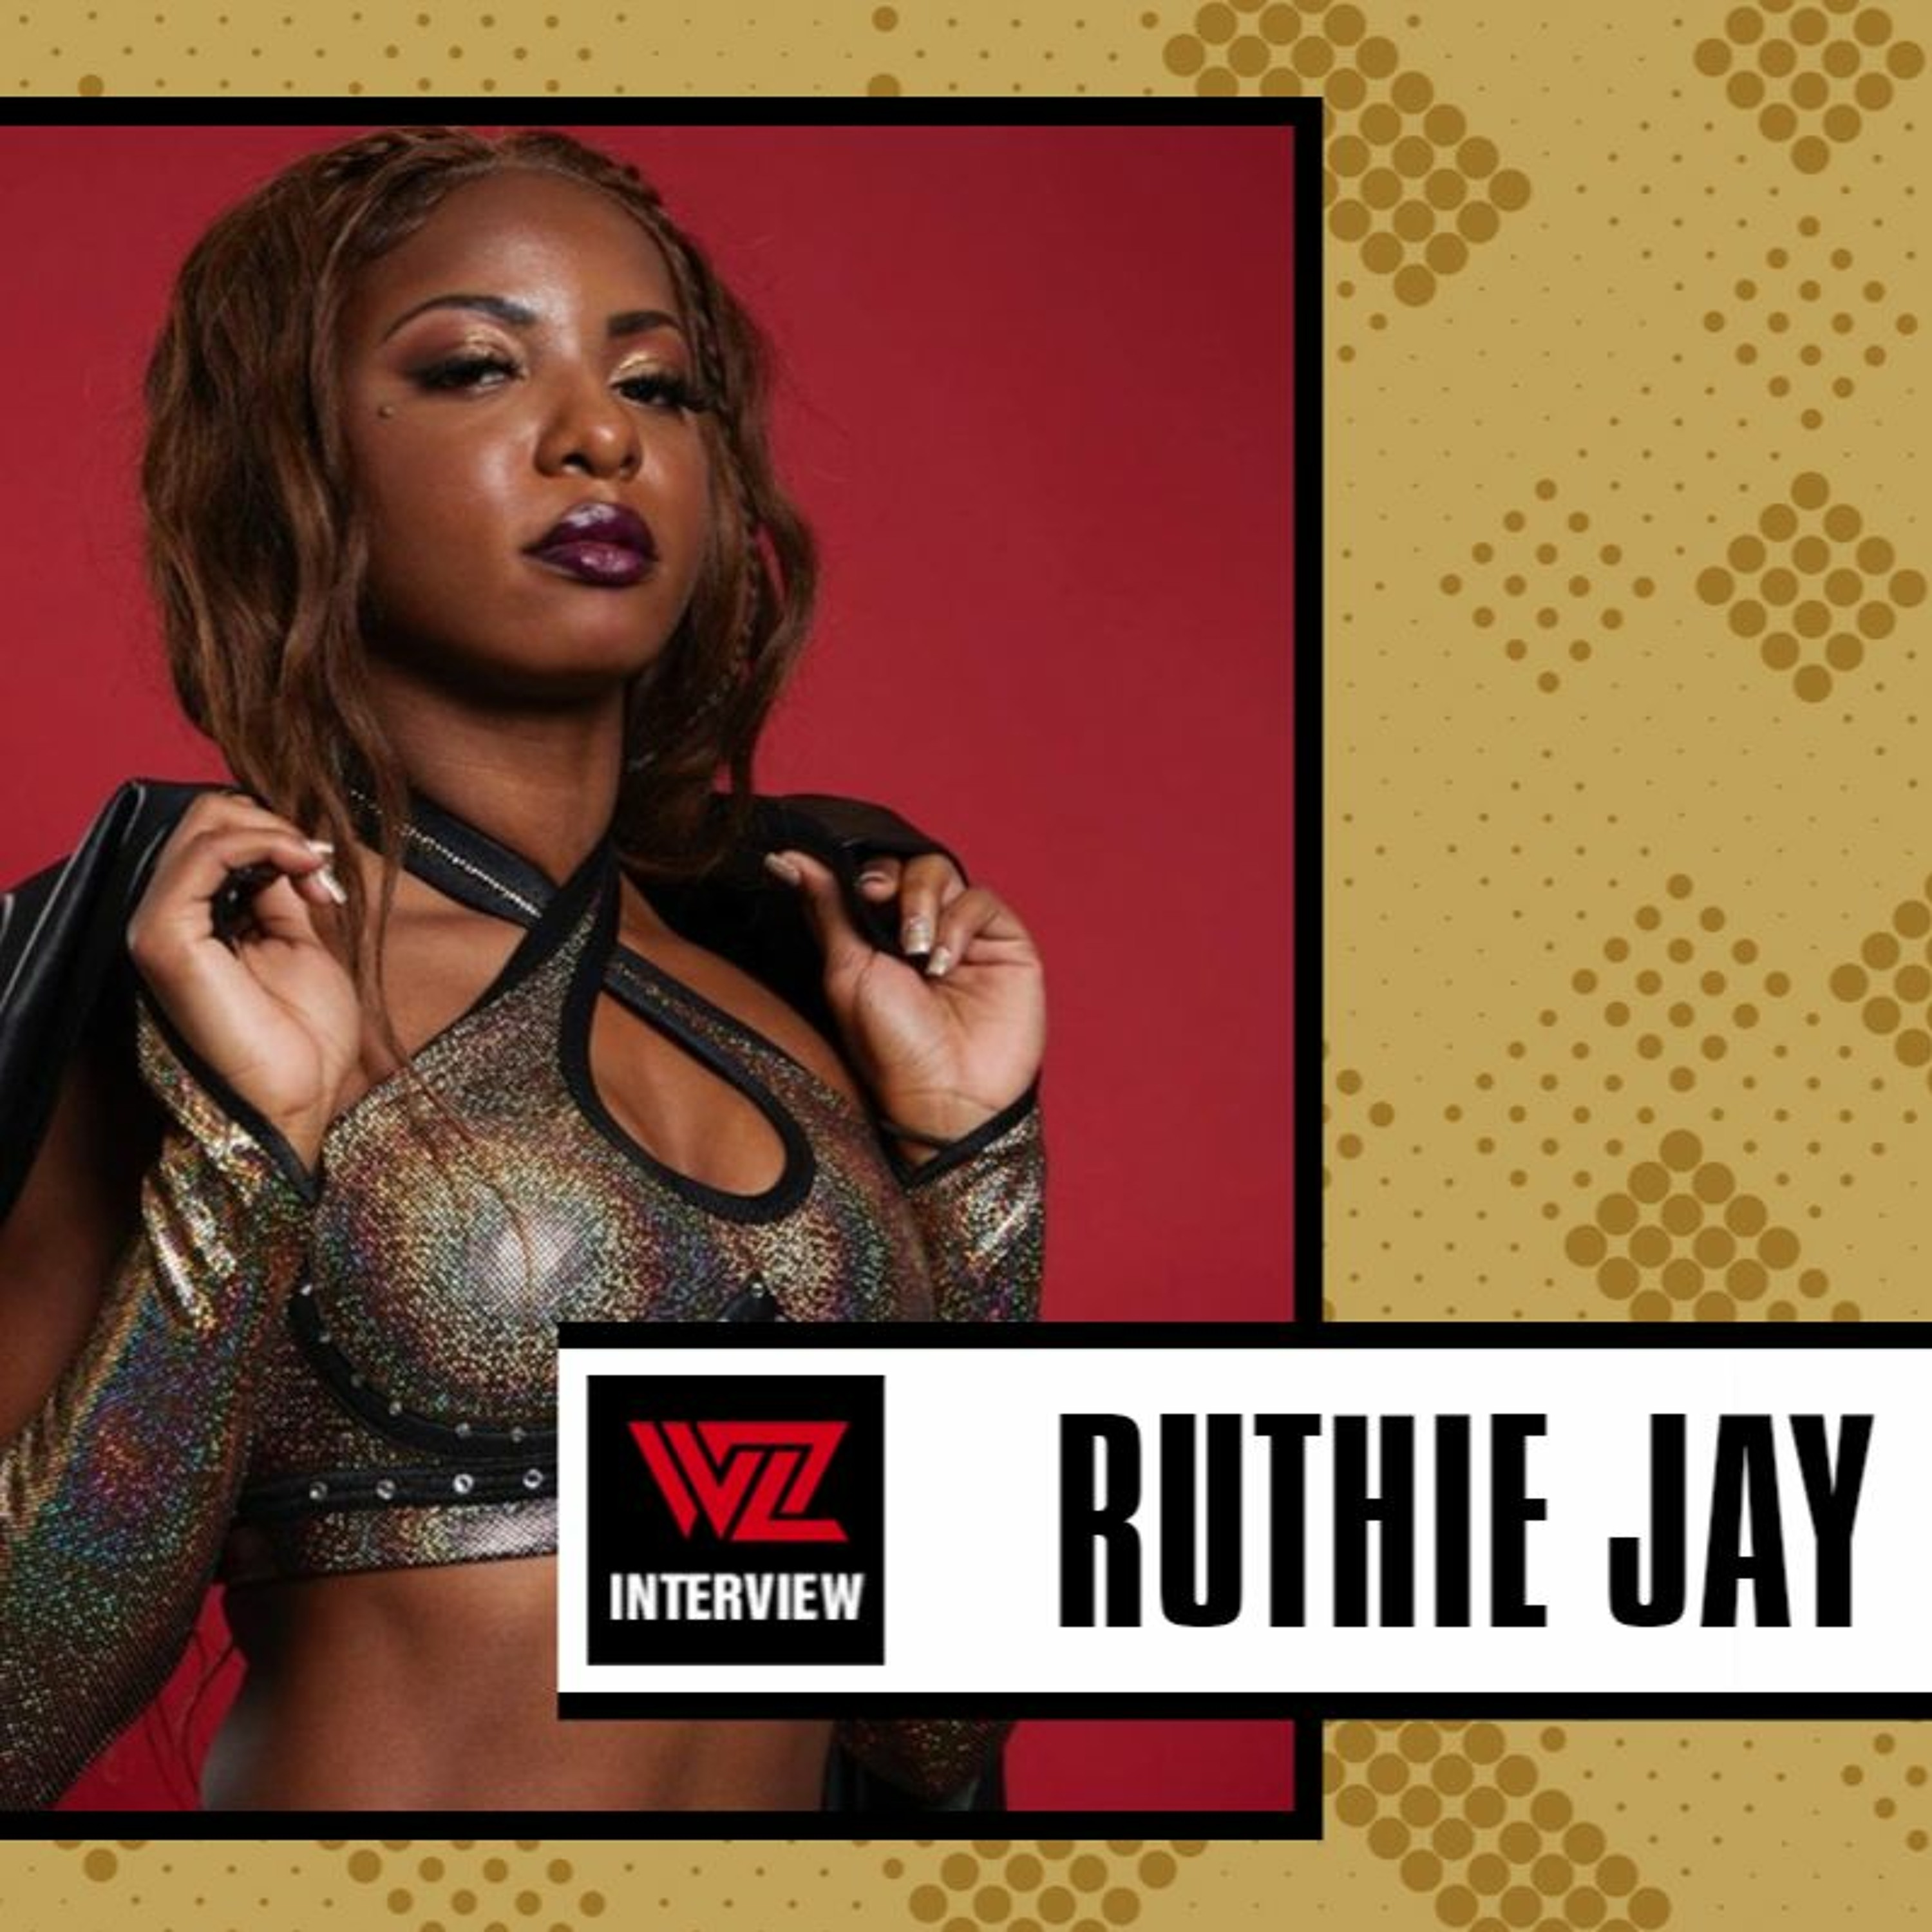 Ruthie Jay Previews NWA Samhain, Has Love For Kurt Angle